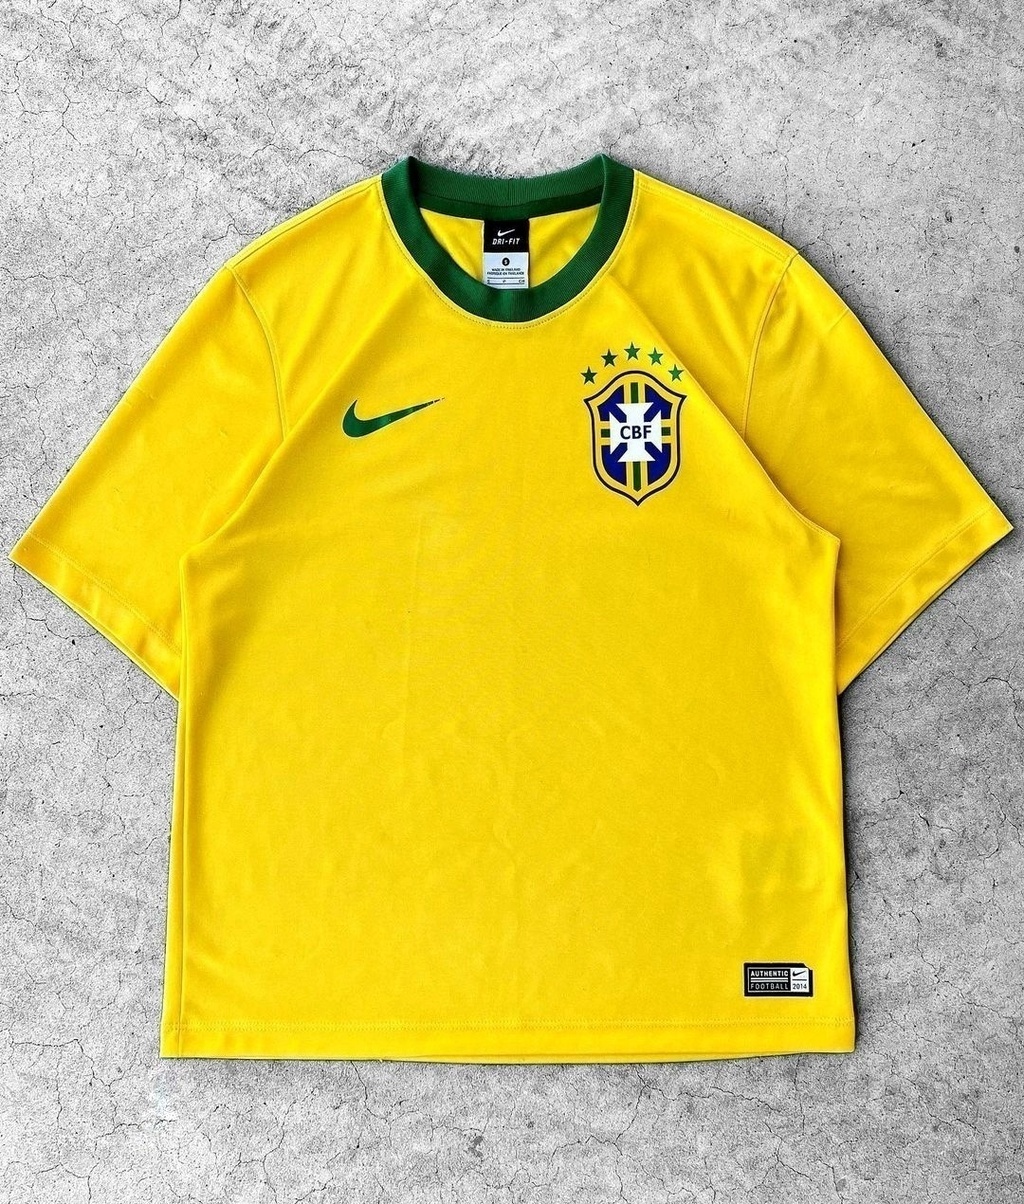 camisa brasil 2014 nike - Comprar em sonhevintage